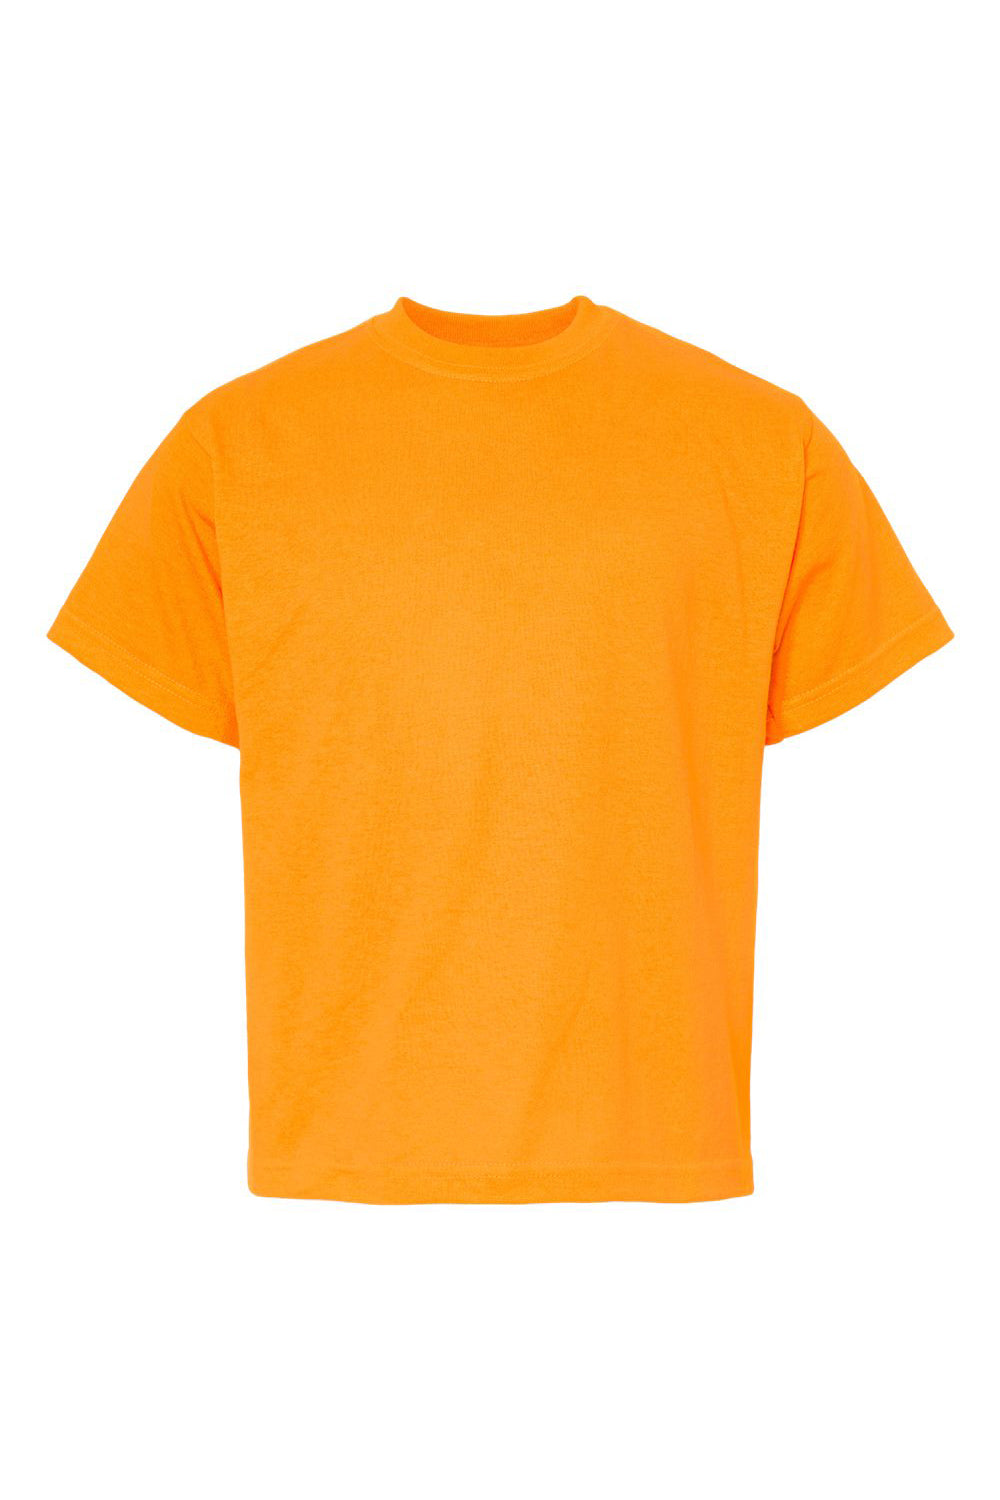 M&O 4850 Youth Gold Soft Touch Short Sleeve Crewneck T-Shirt Safety Orange Flat Front